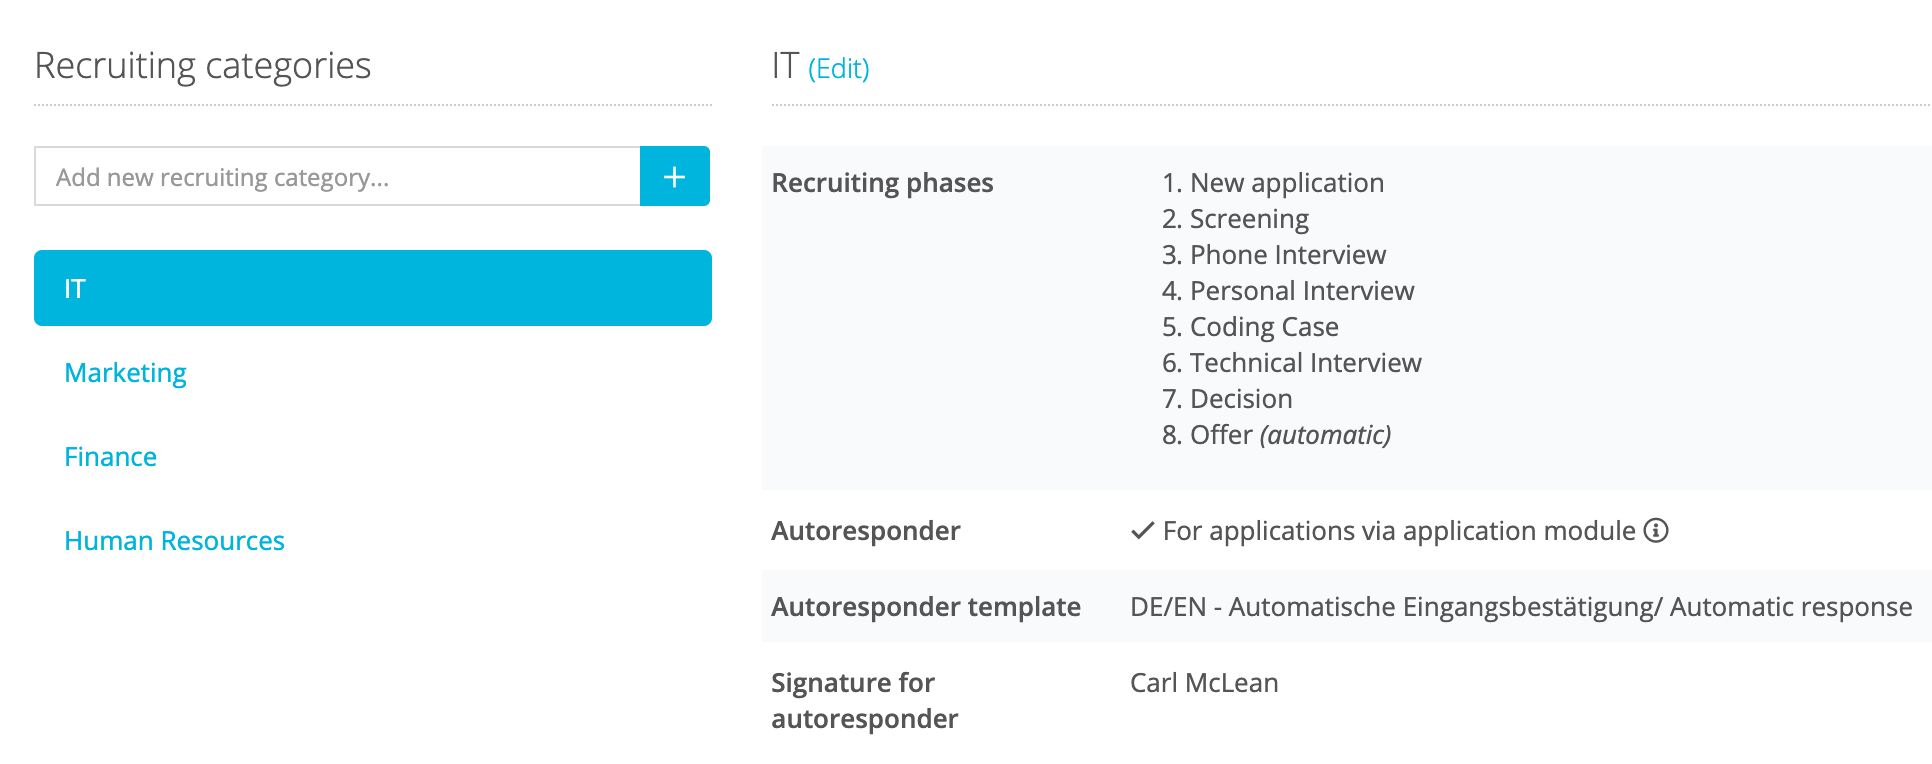 recruiting-categories-departments_en-us.png